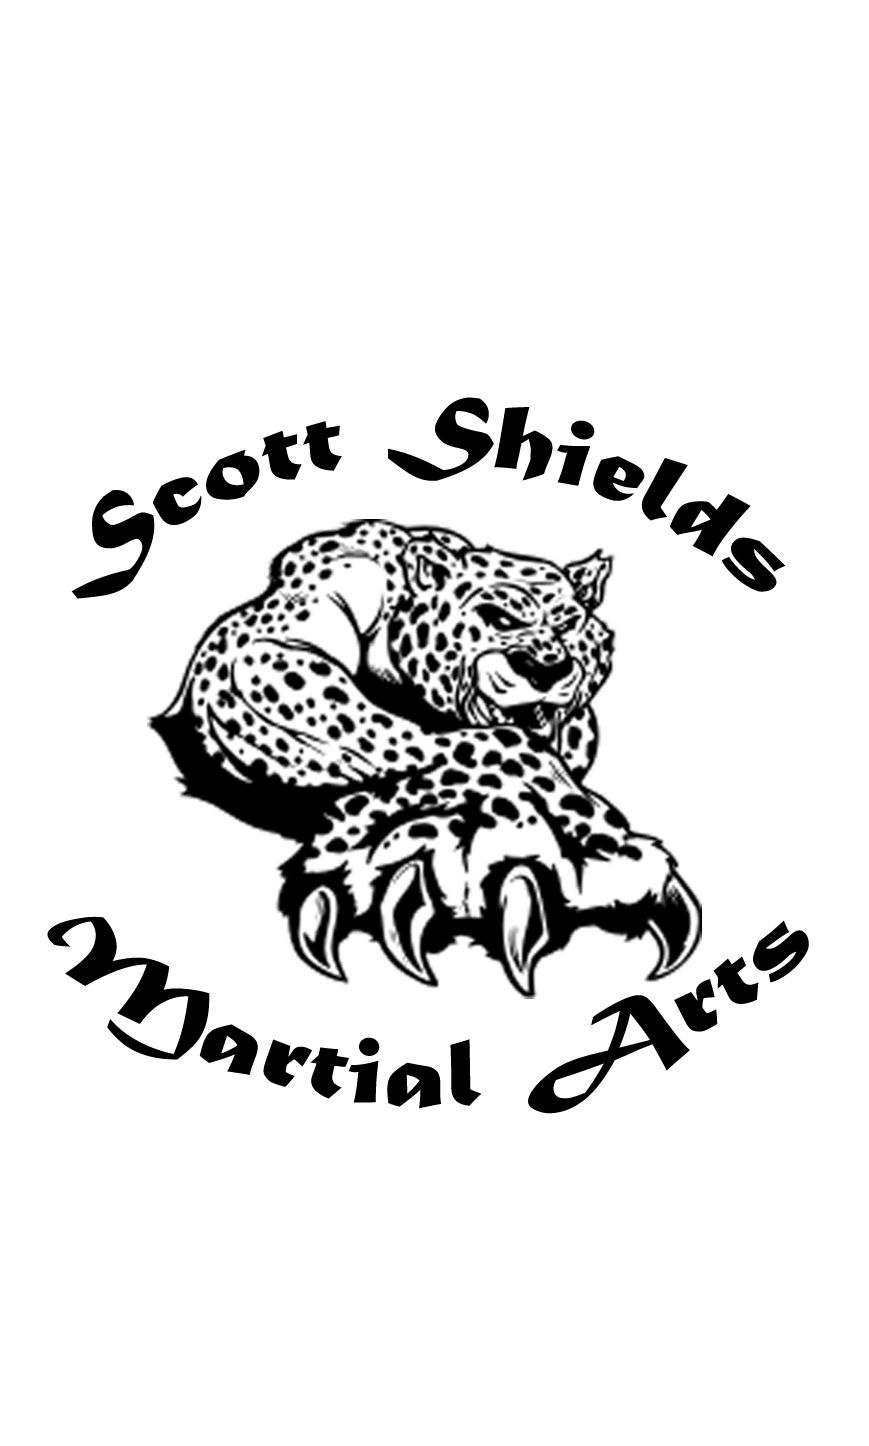 Scott Shields Martial Arts Academy